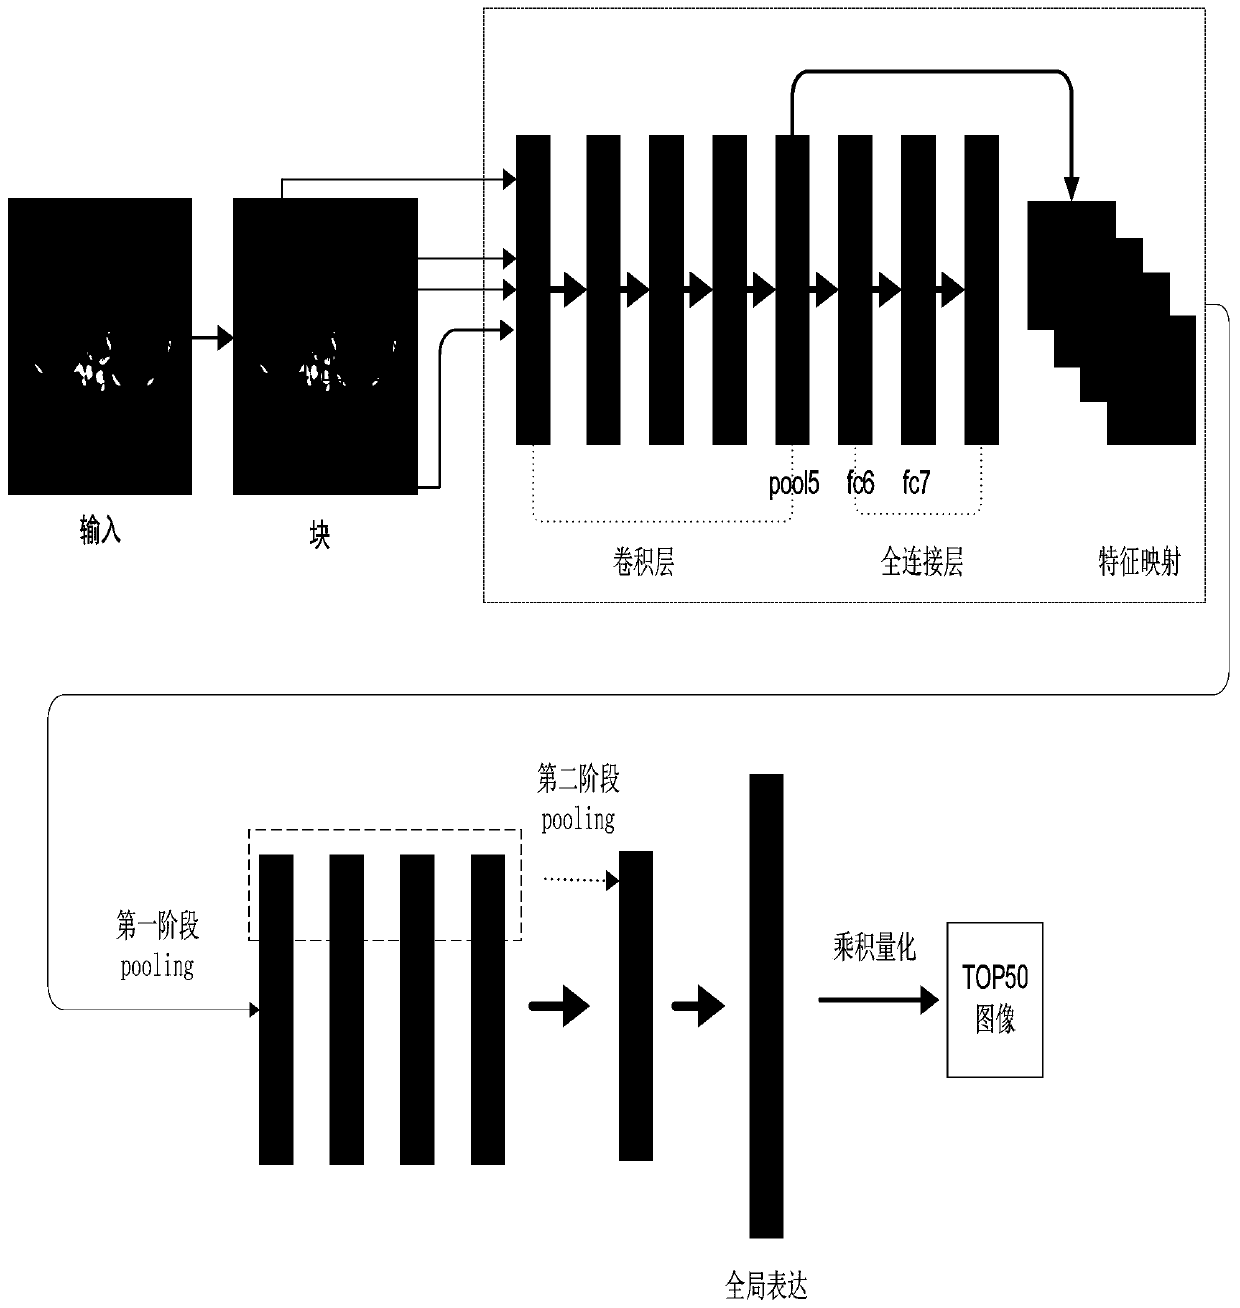 A Medical Image Retrieval Method Based on Deep Learning and Radon Transform